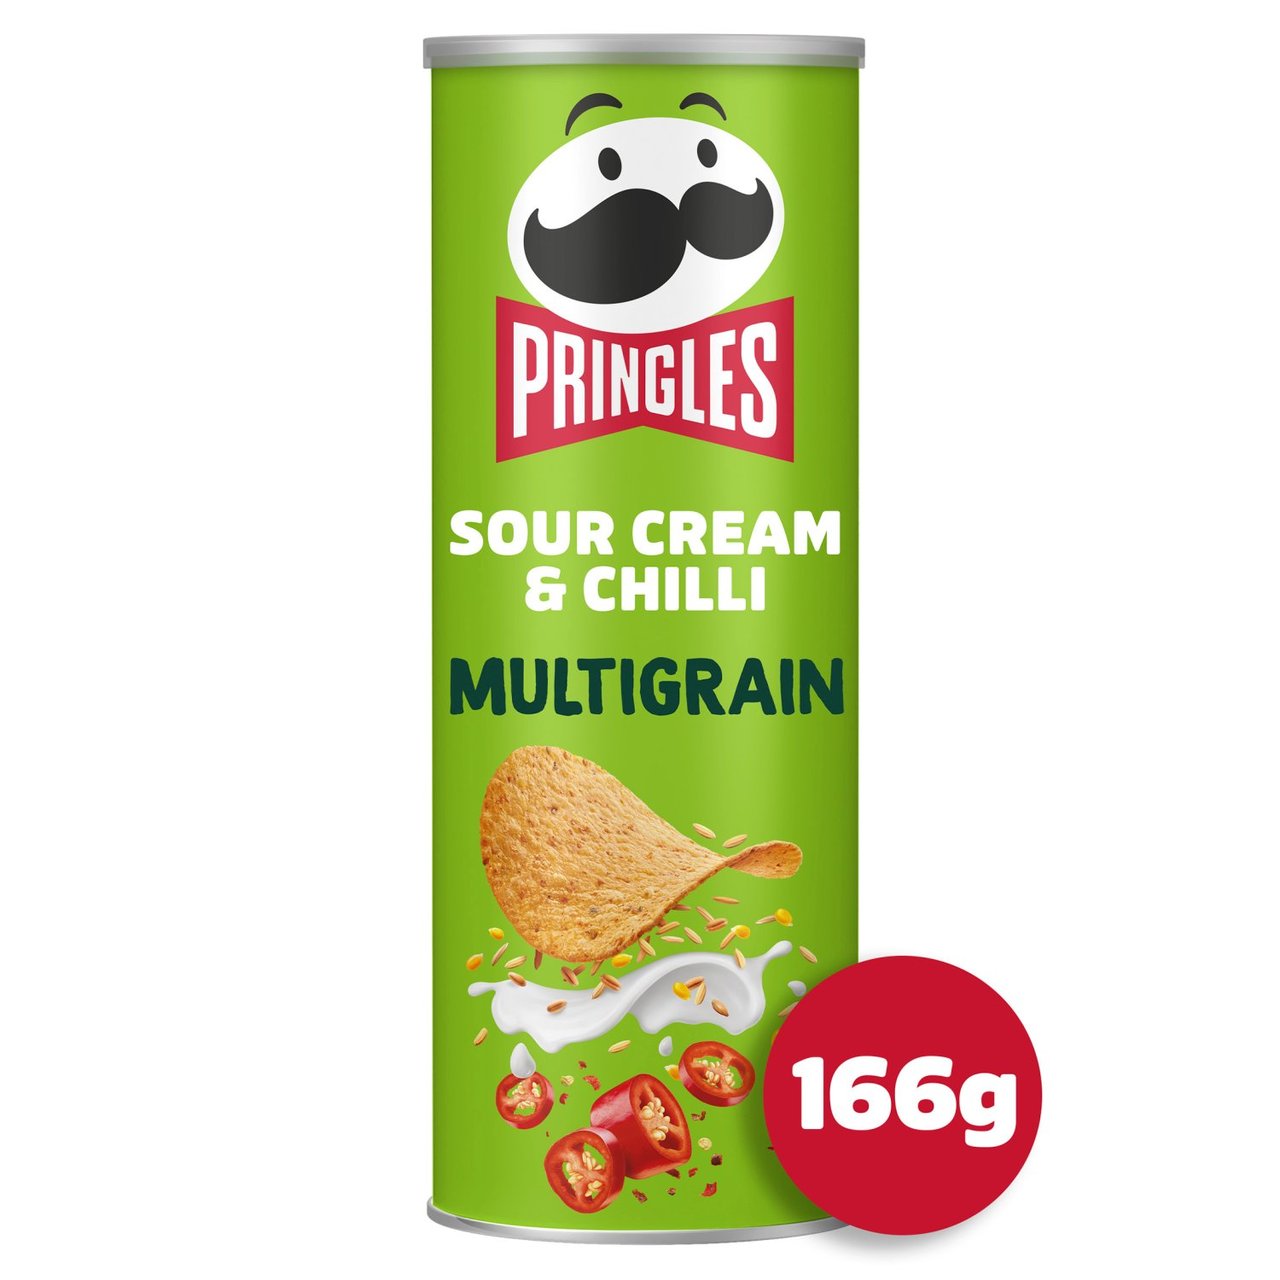 Pringles Multigrain Sour Cream 166g